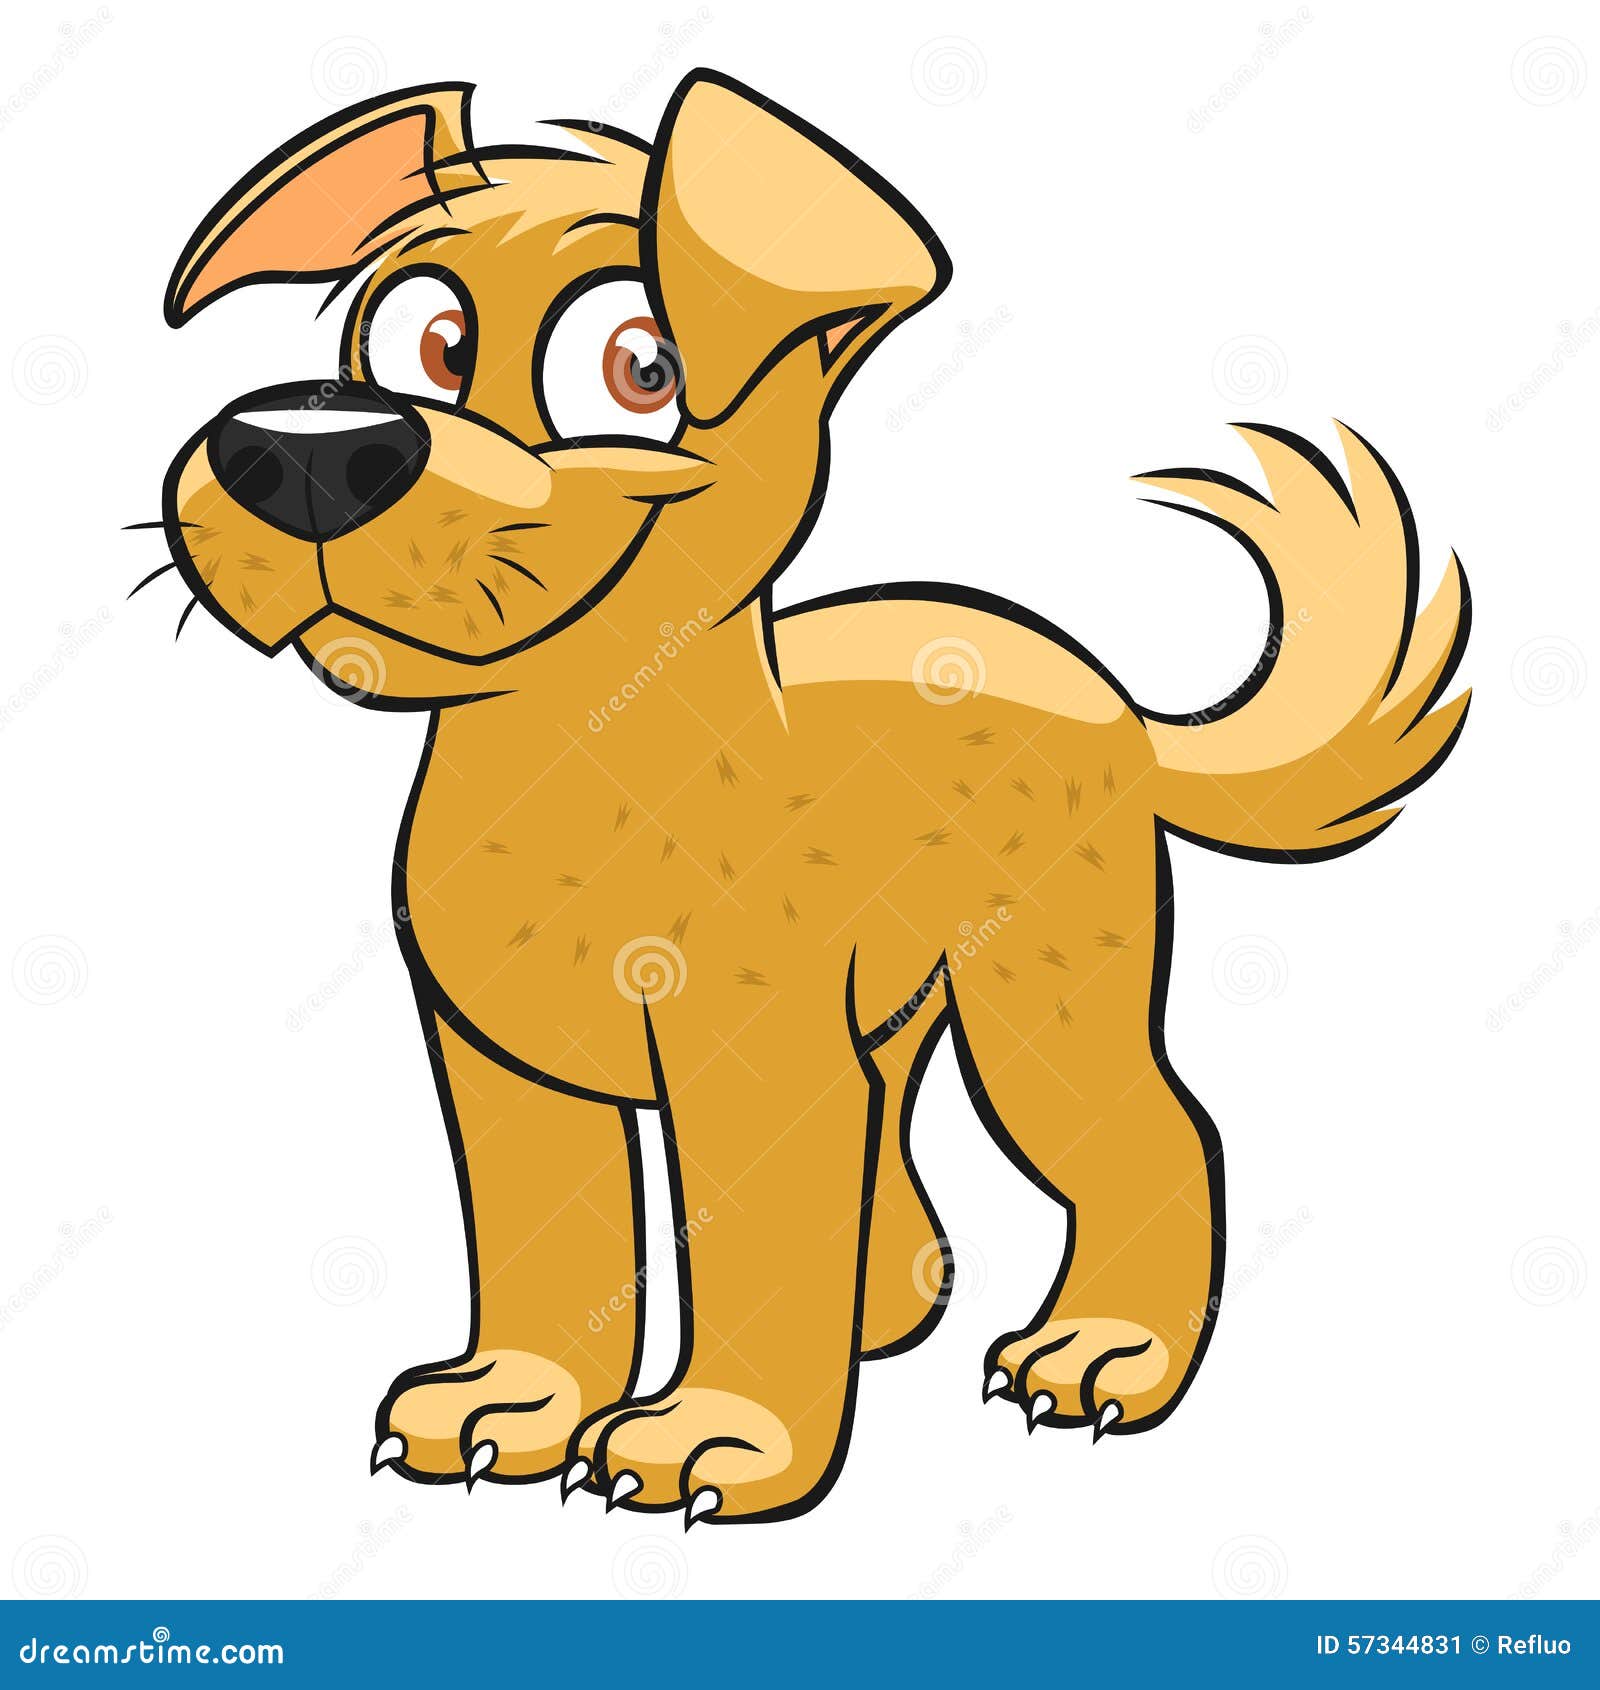 Cute cartoon dog stock vector. Illustration of smile - 57344831